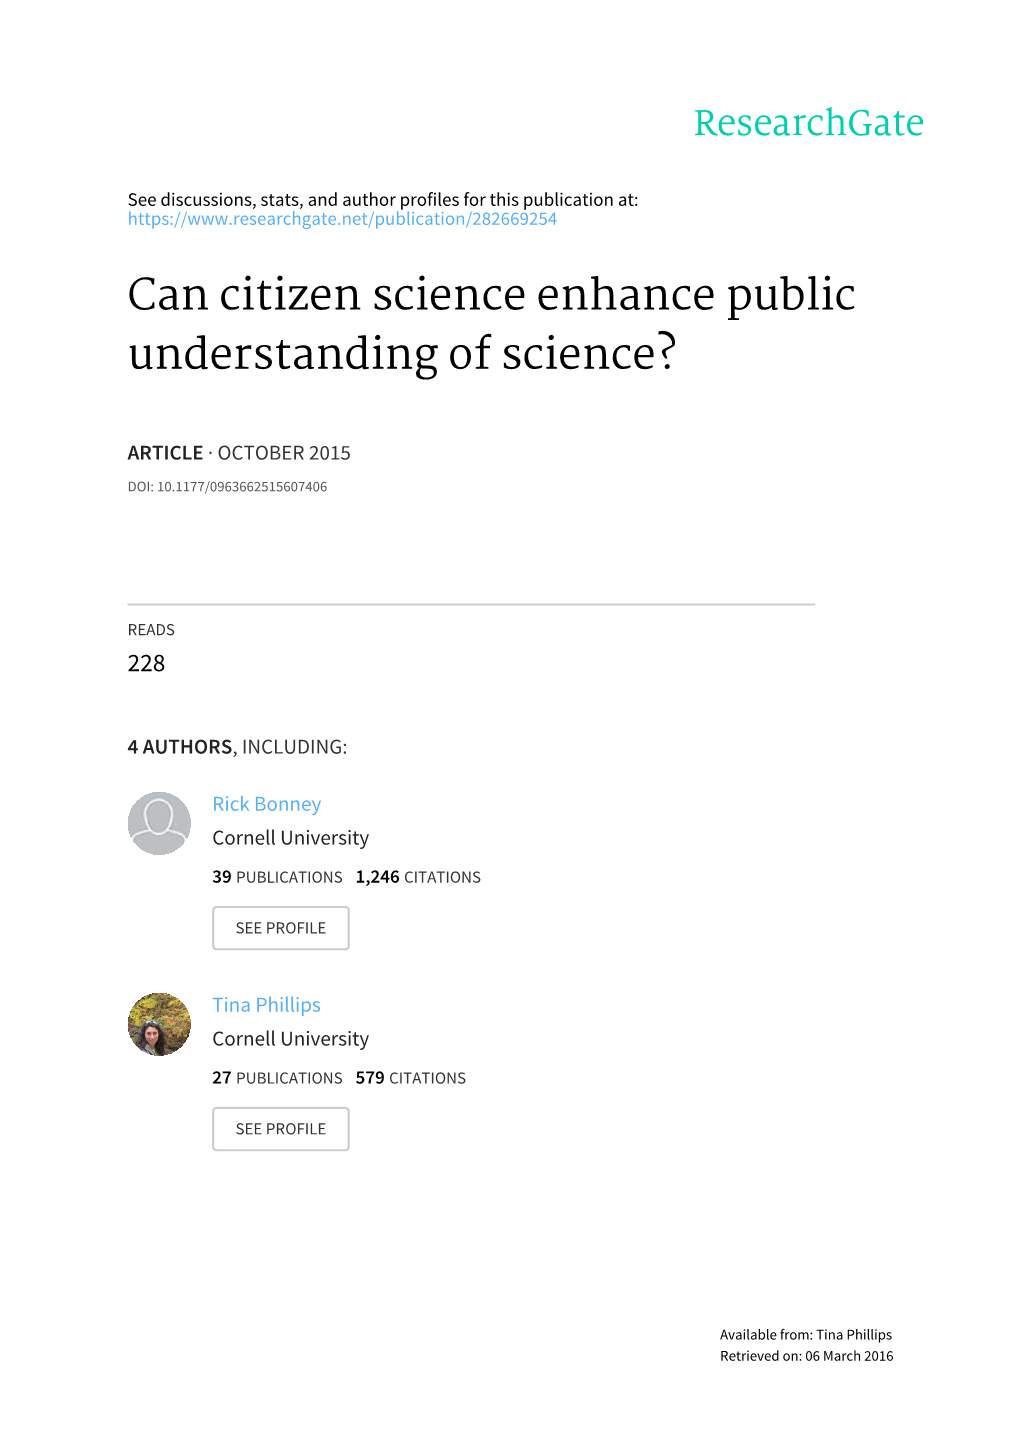 Can Citizen Science Enhance Public Understanding of Science?